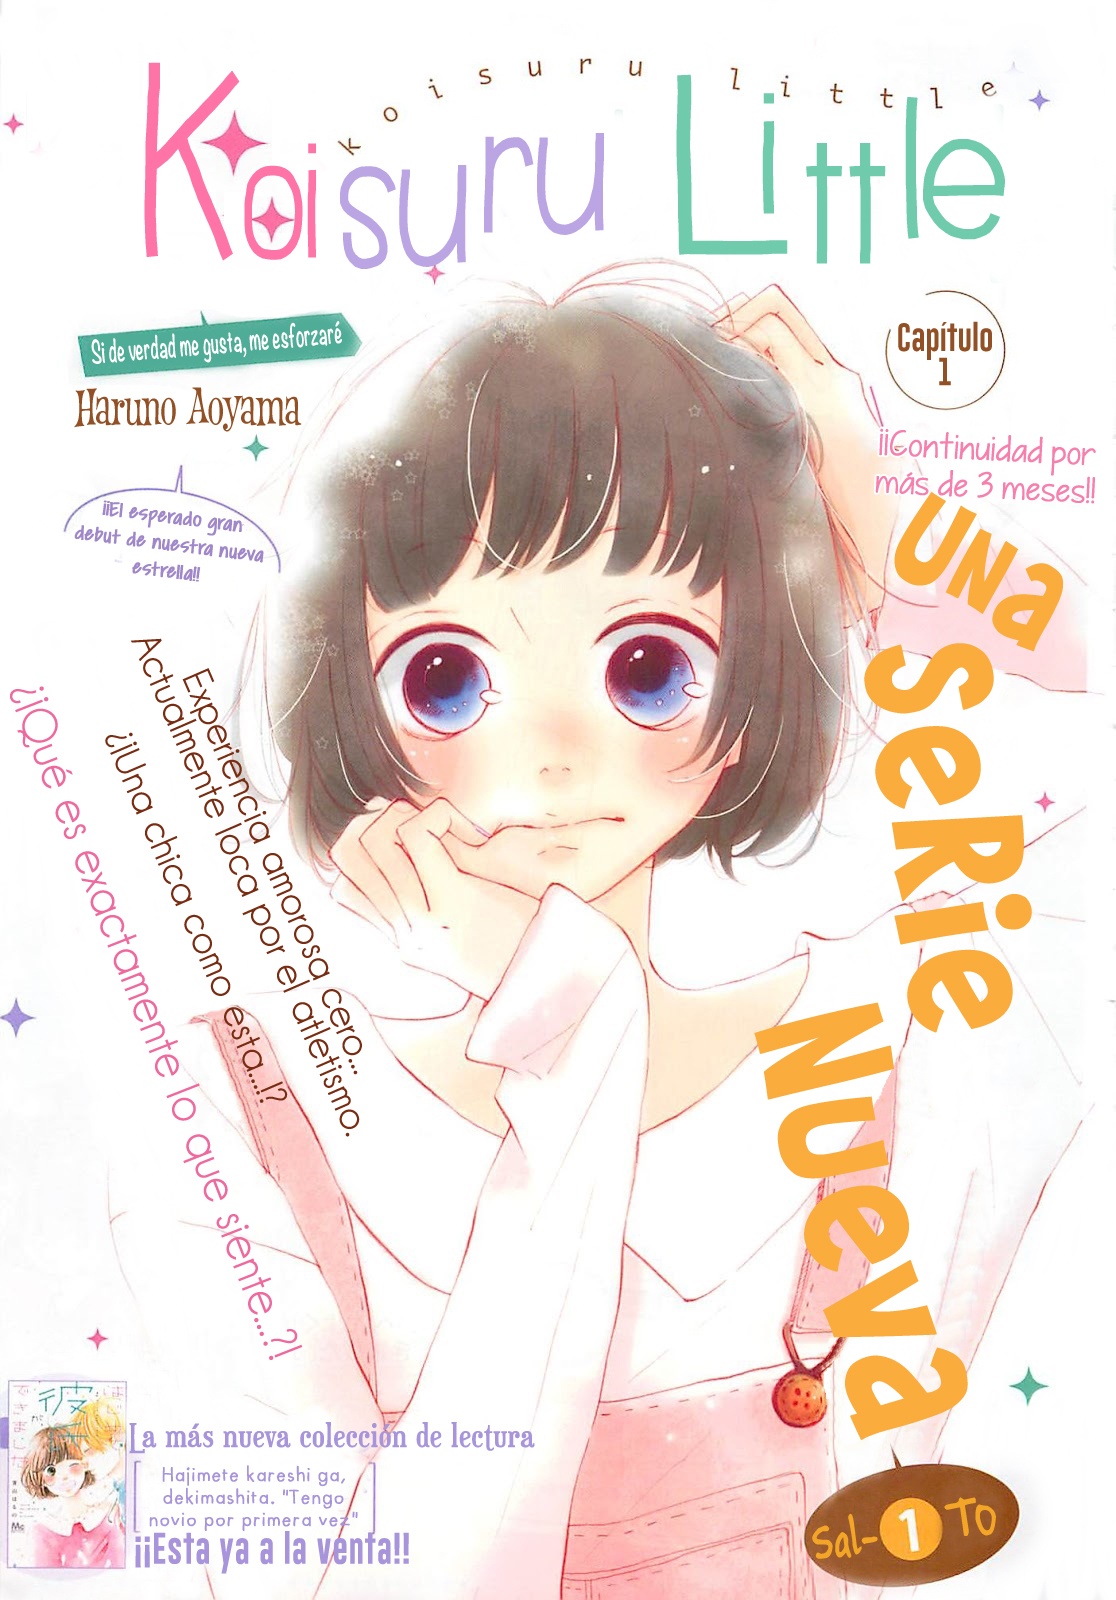 Koisuru Little cover